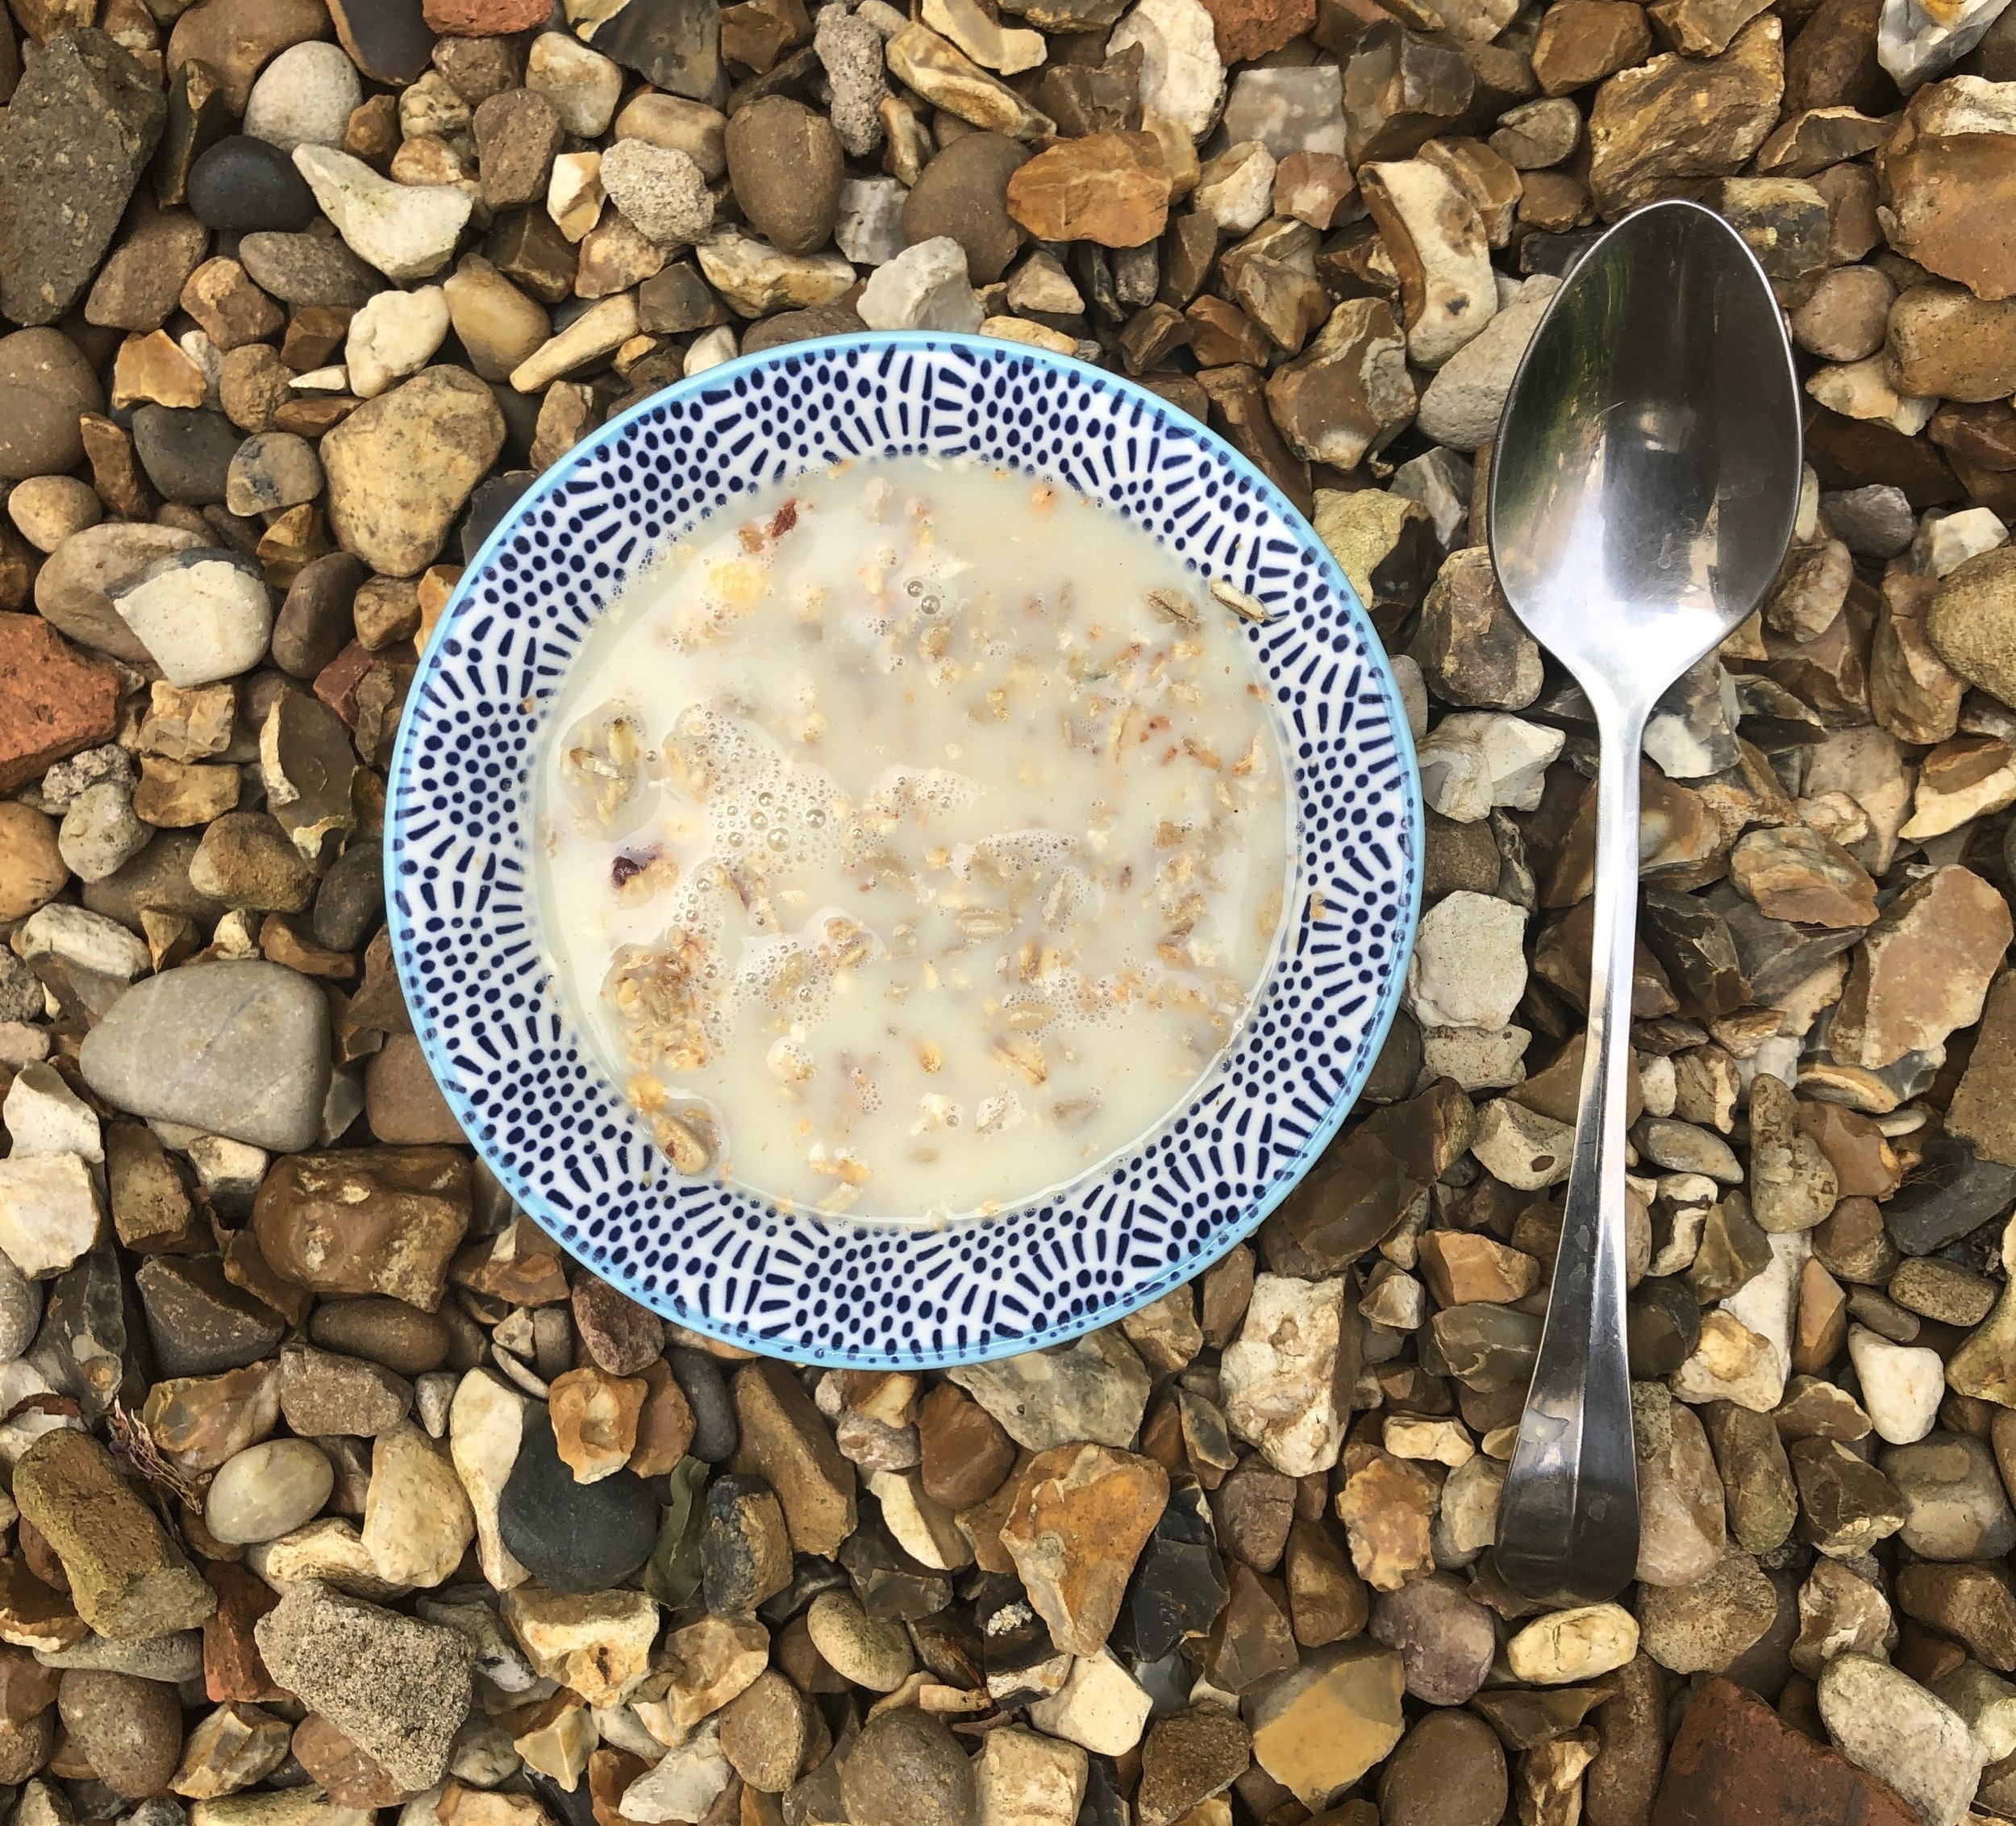 Dorset Cereals Nutty Granola in our gravel garden